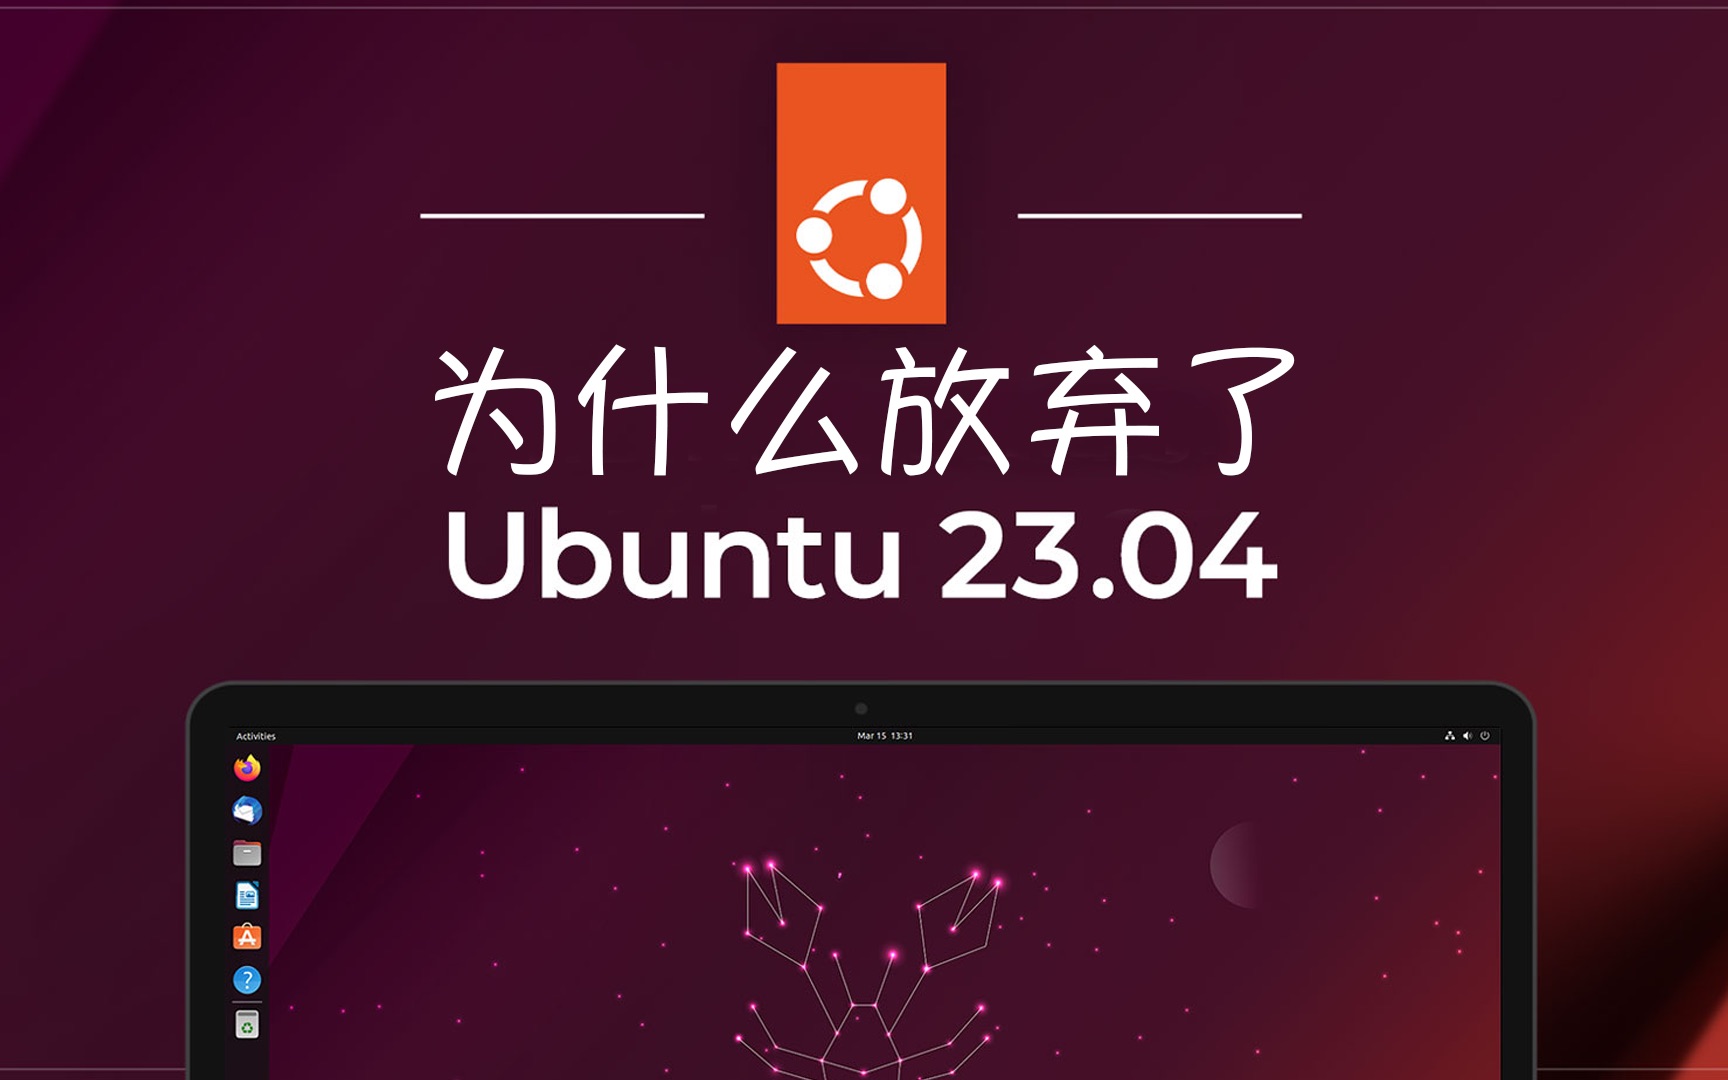 Unity桌面很棒，但Ubuntu的一个严重问题让我不得不放弃了它